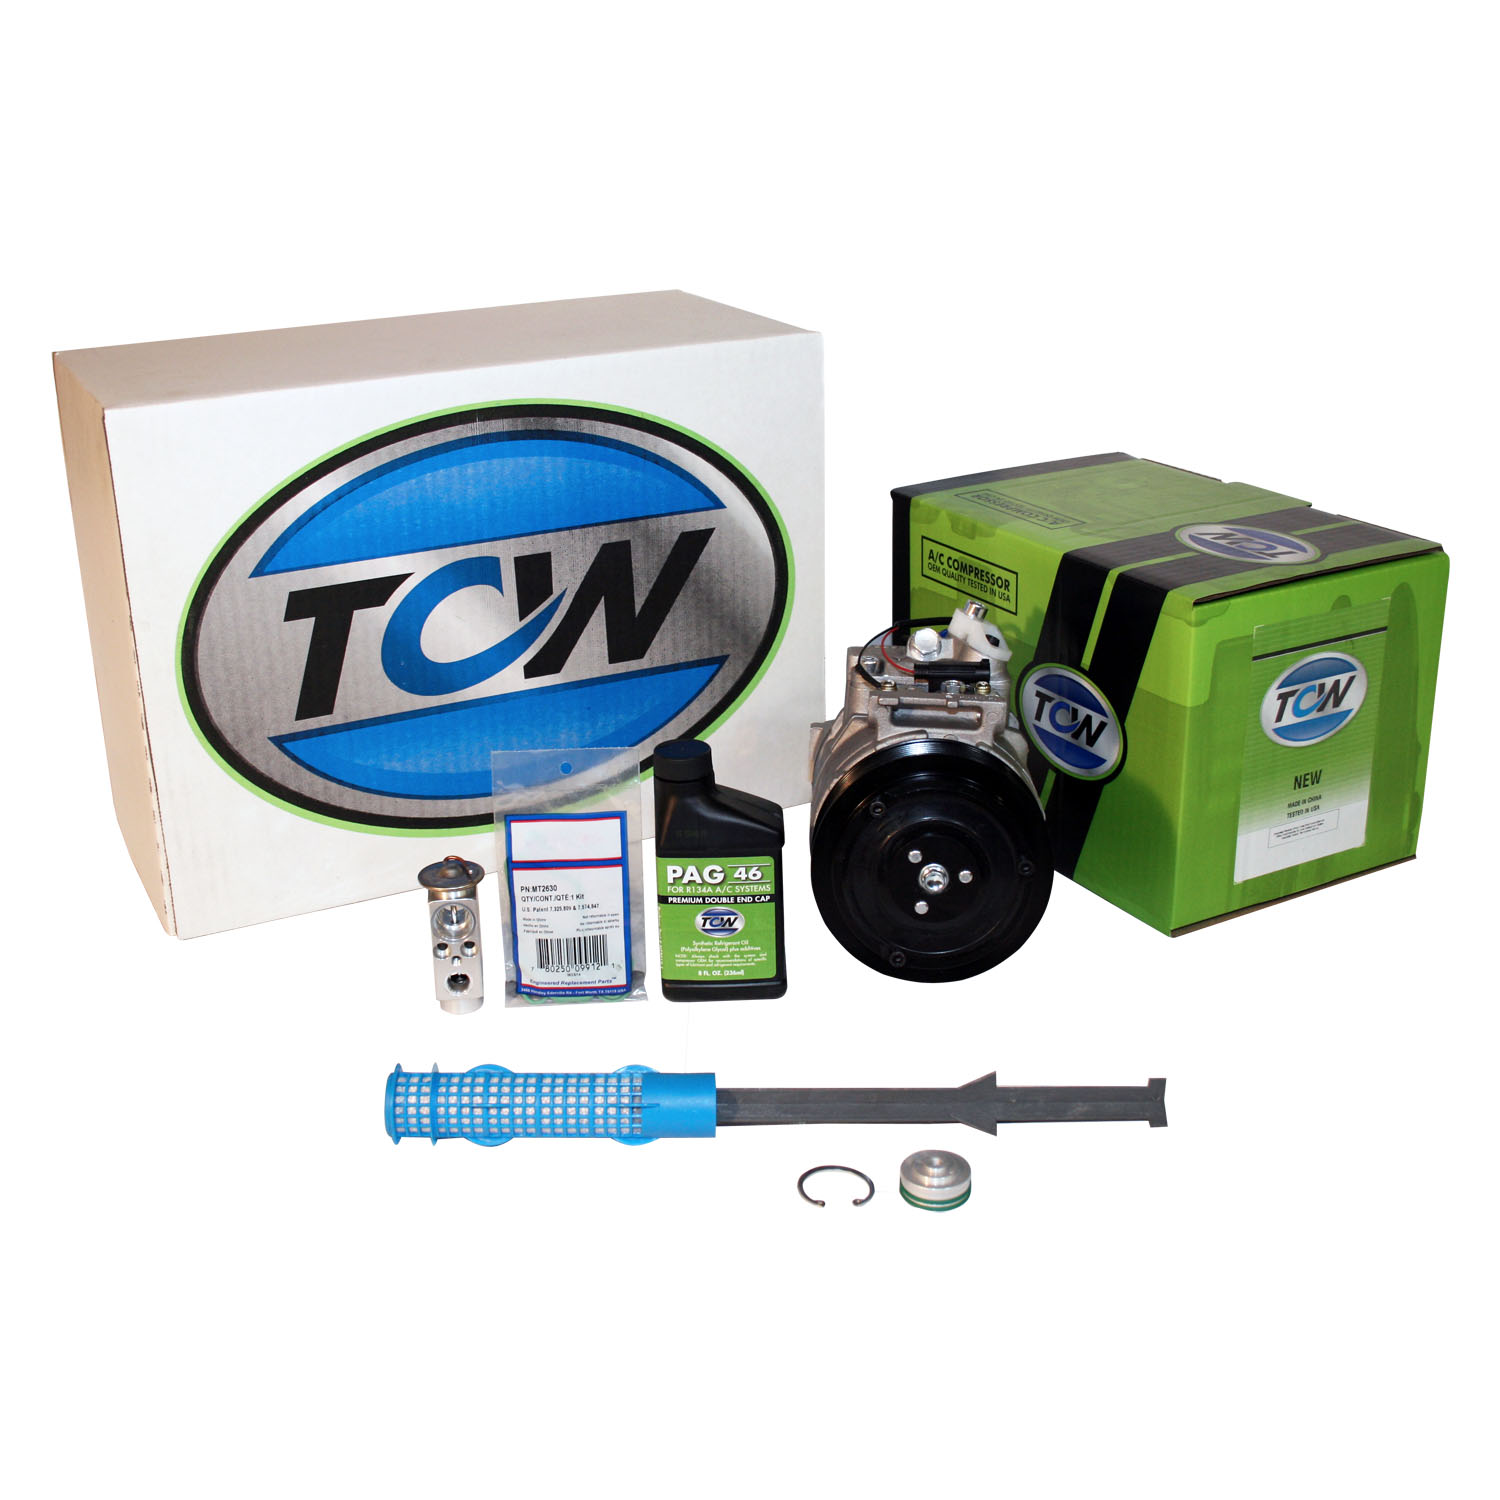 TCW Vehicle A/C Kit K1000431N New Product Image field_60b6a13a6e67c